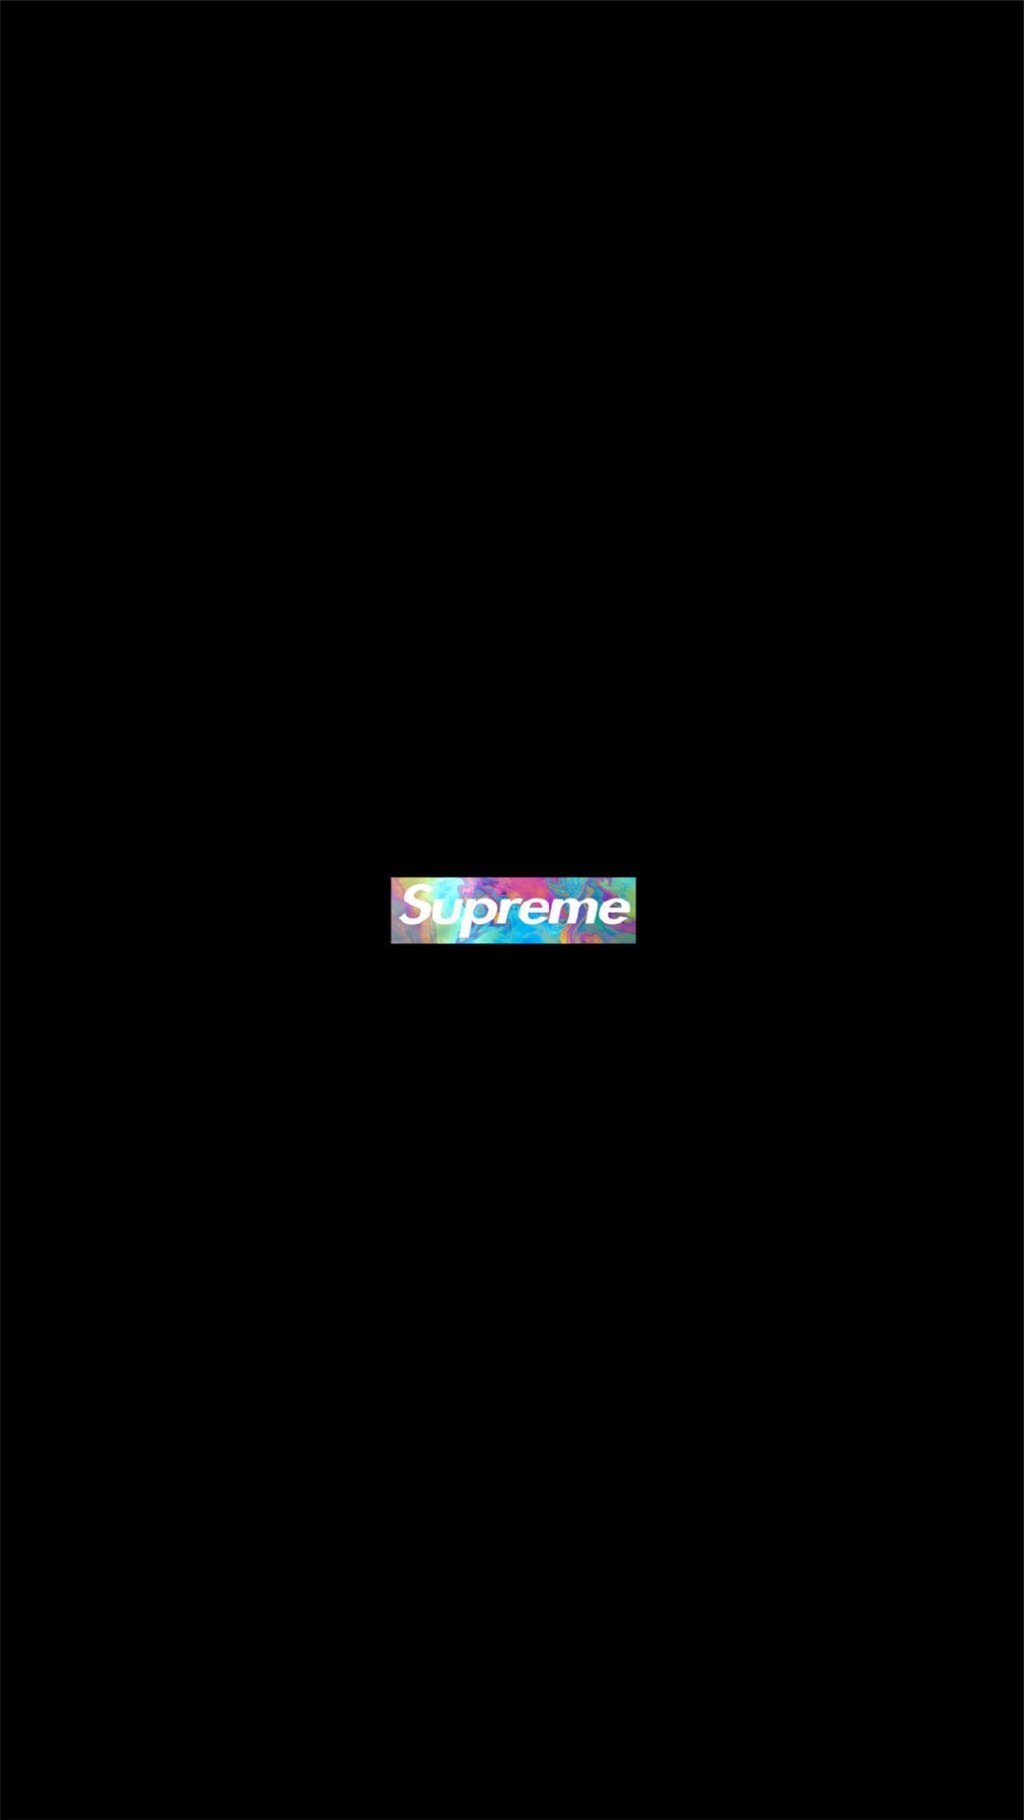 Supreme logo极简潮流高清手机壁纸